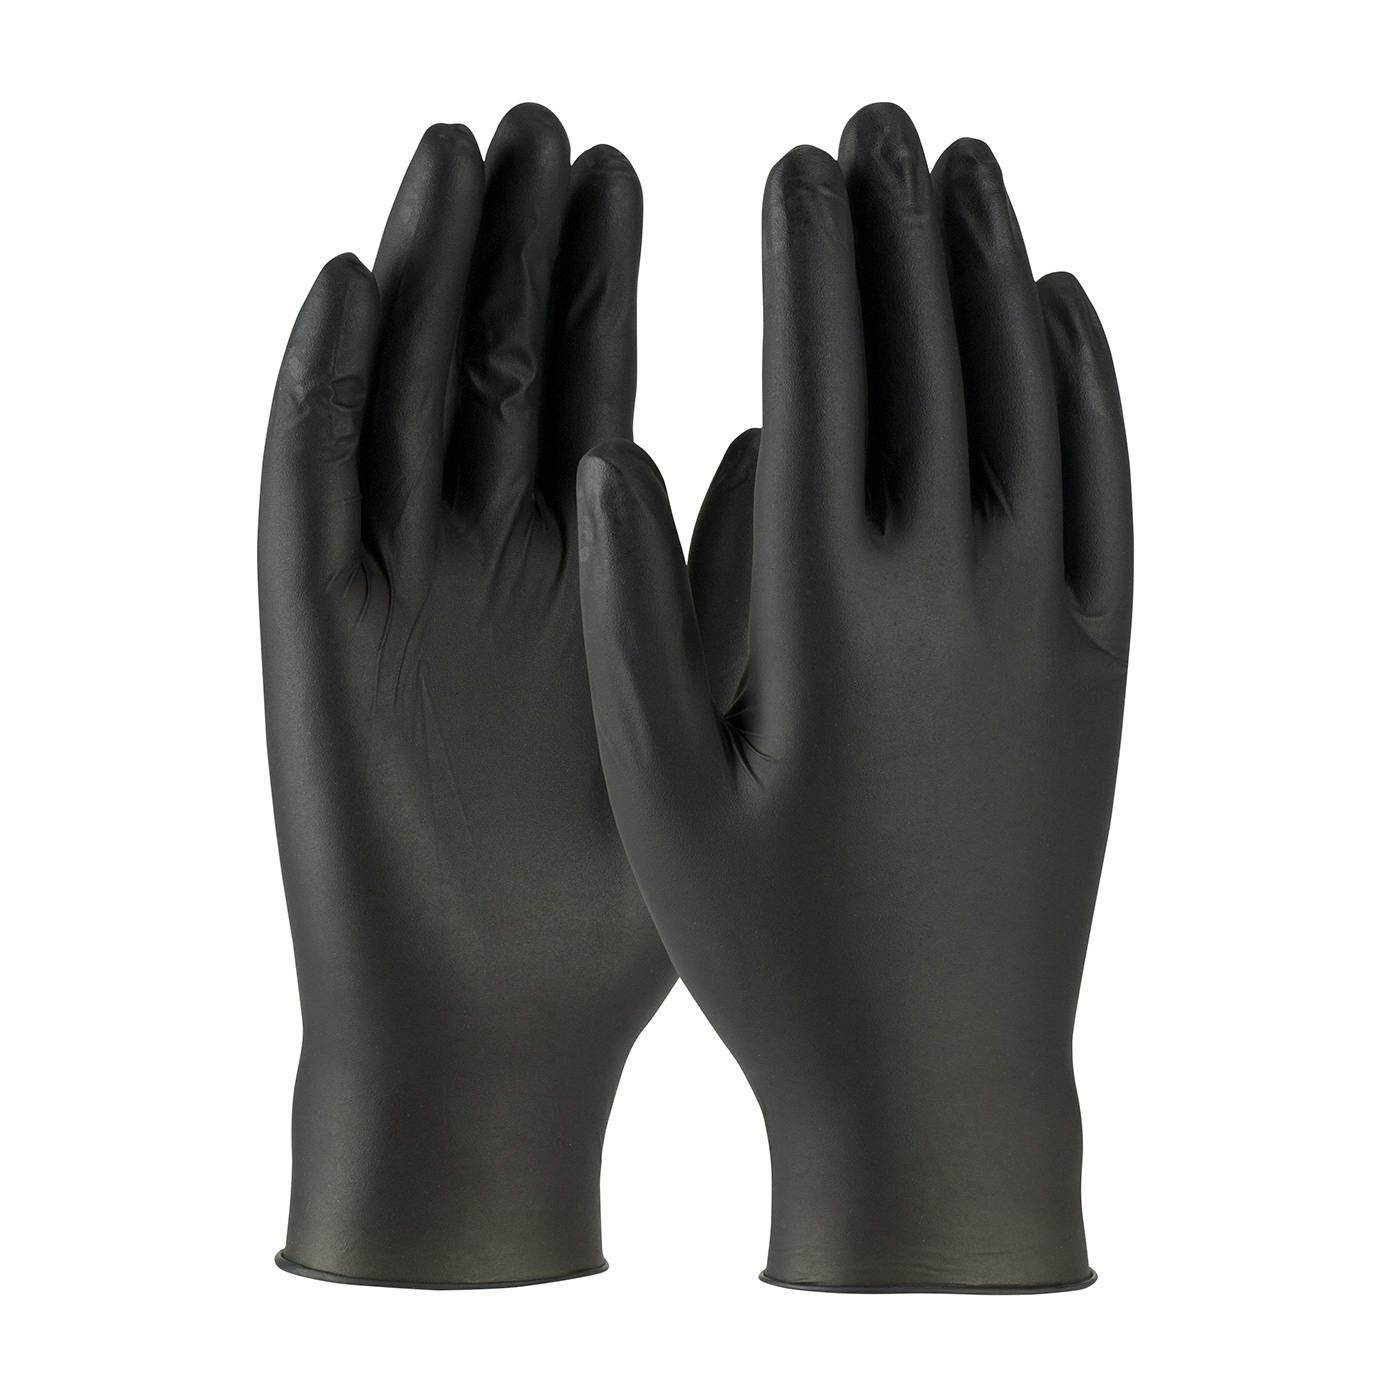 Ambi-dex® Turbo Disposable Nitrile Glove, Powder Free with Textured Grip - 5 mil (2920)_1